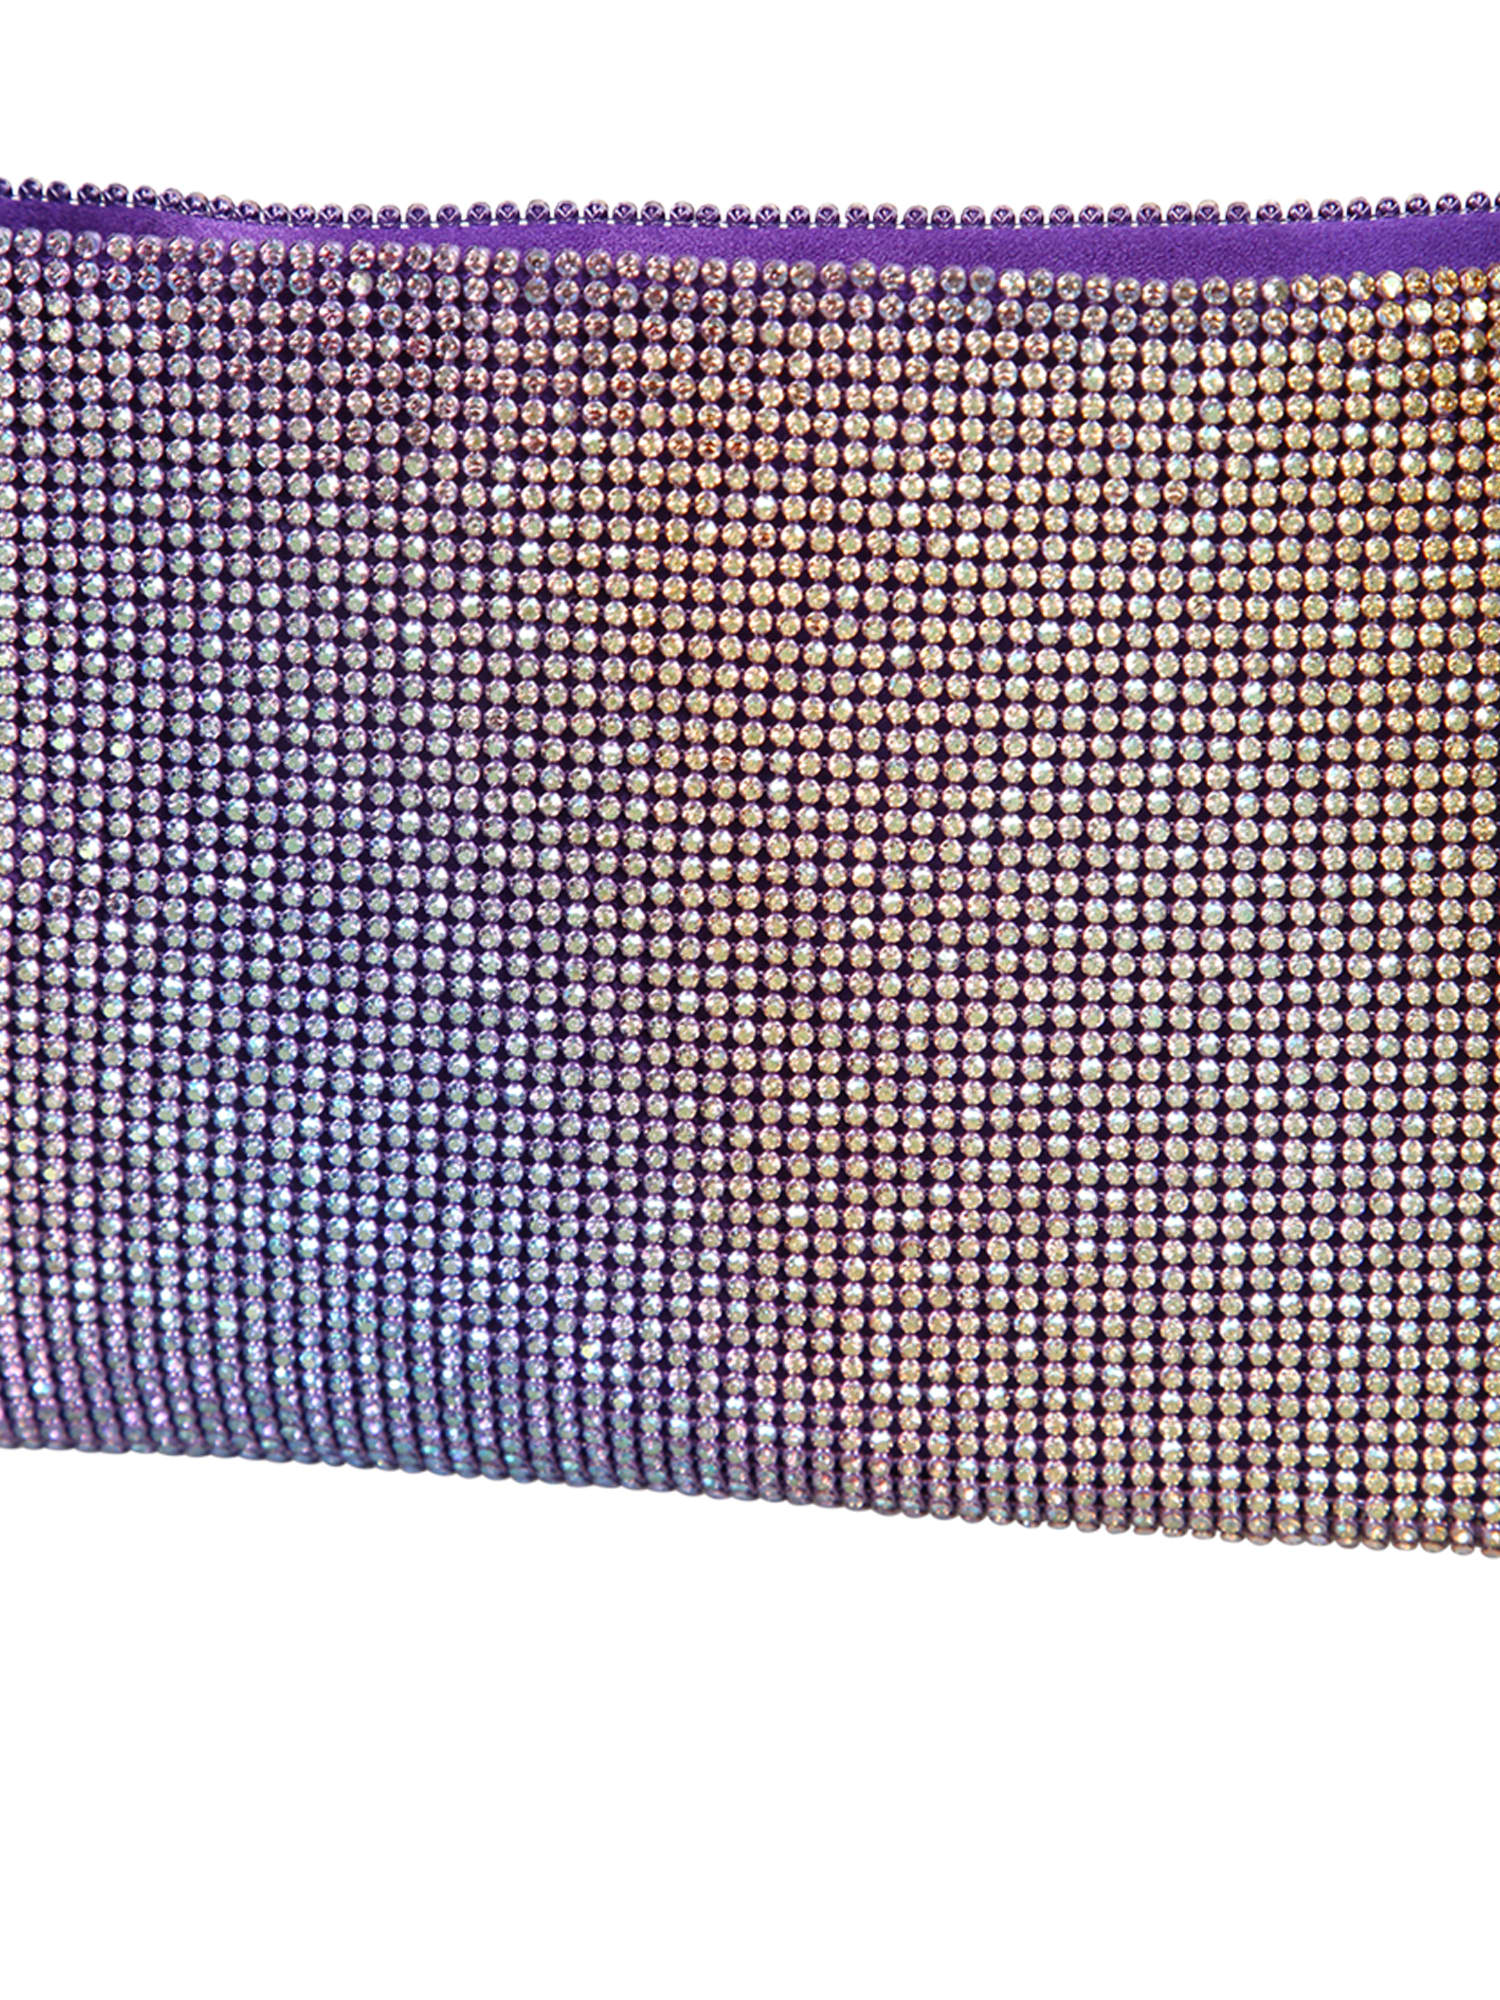 Shop Benedetta Bruzziches Lilac Shoulder Bag In Purple